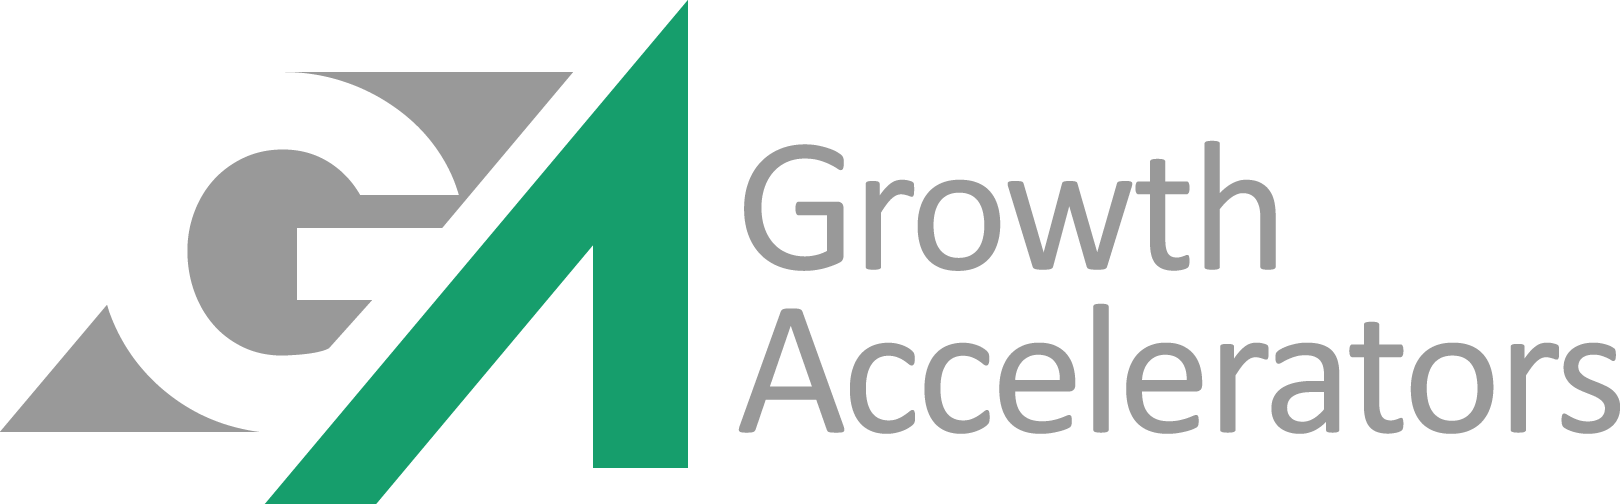 Growth Accelerators, Inc.